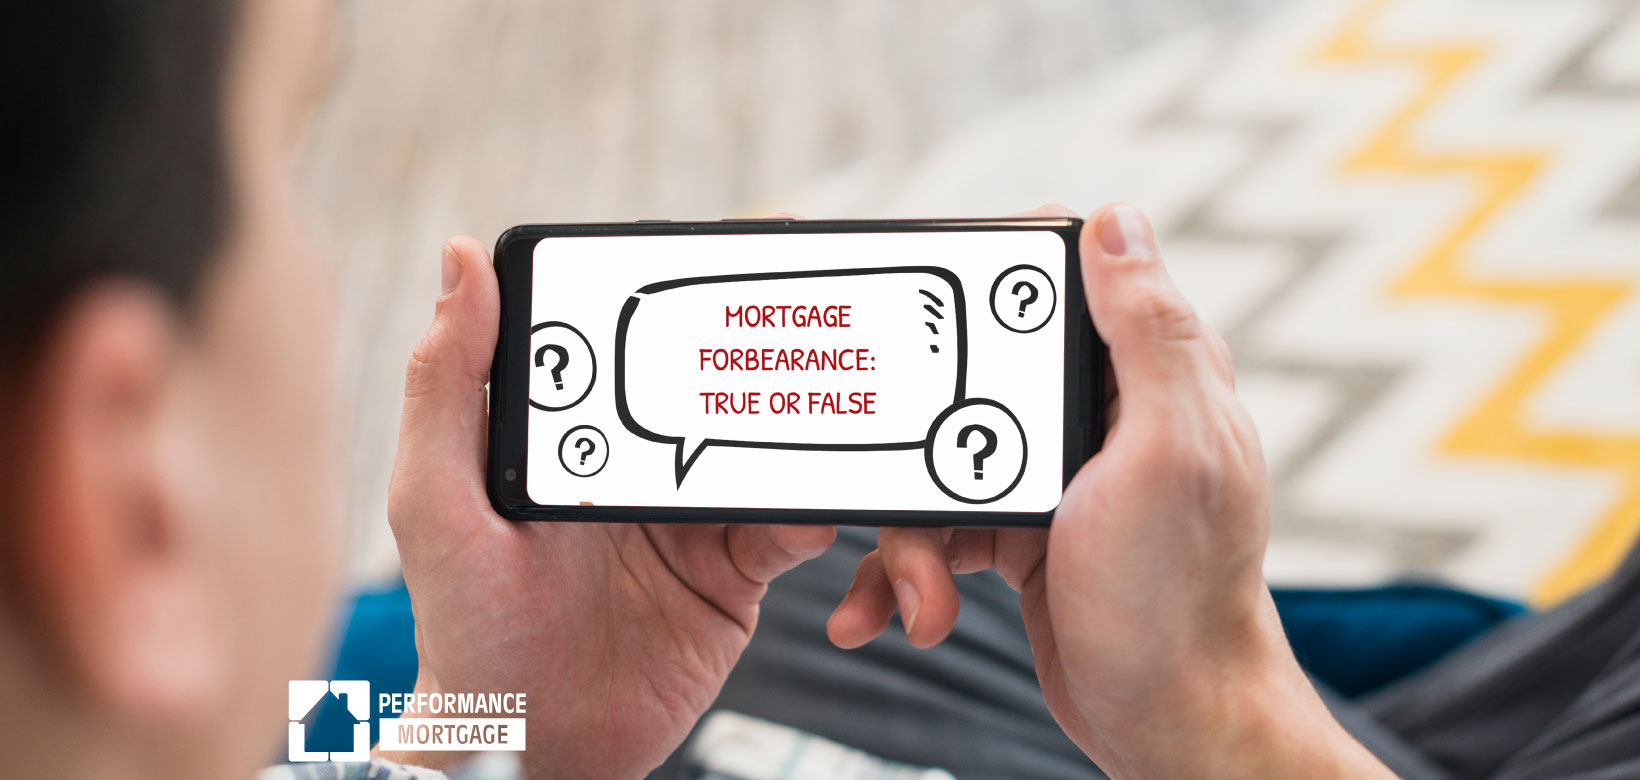 Mortgage-Forbearance-Video